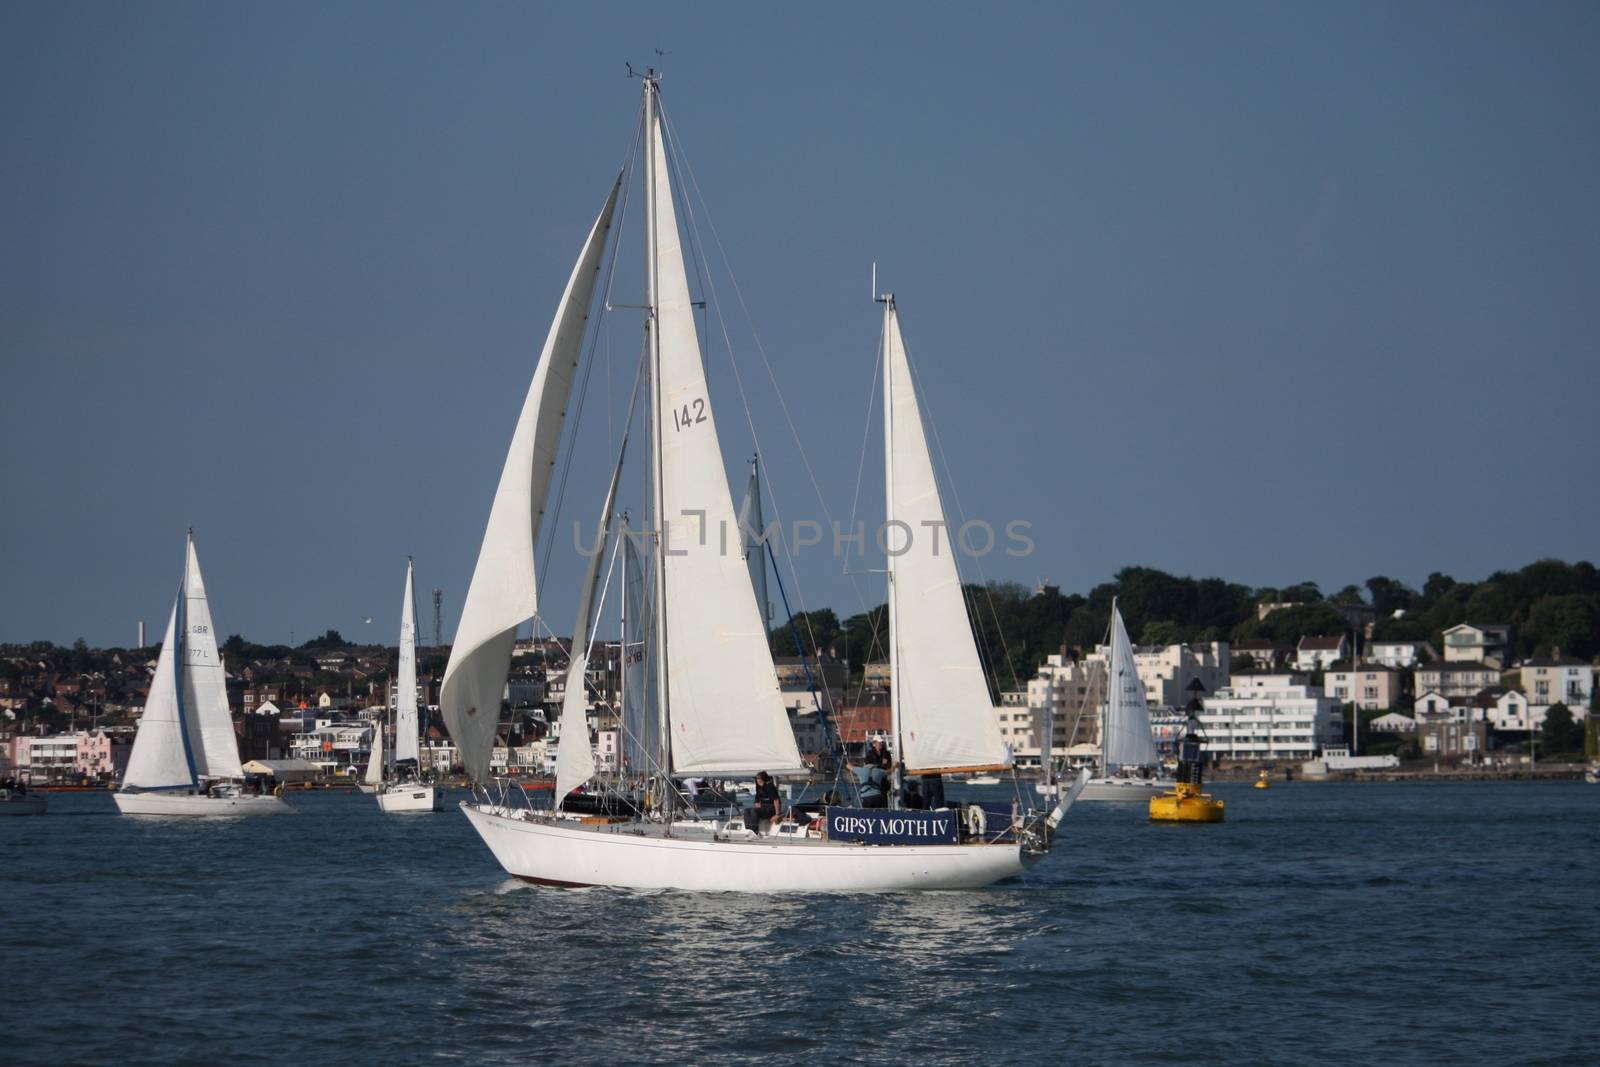 Gipsy Moth IV sailbboat sailing on the solent by chrisga